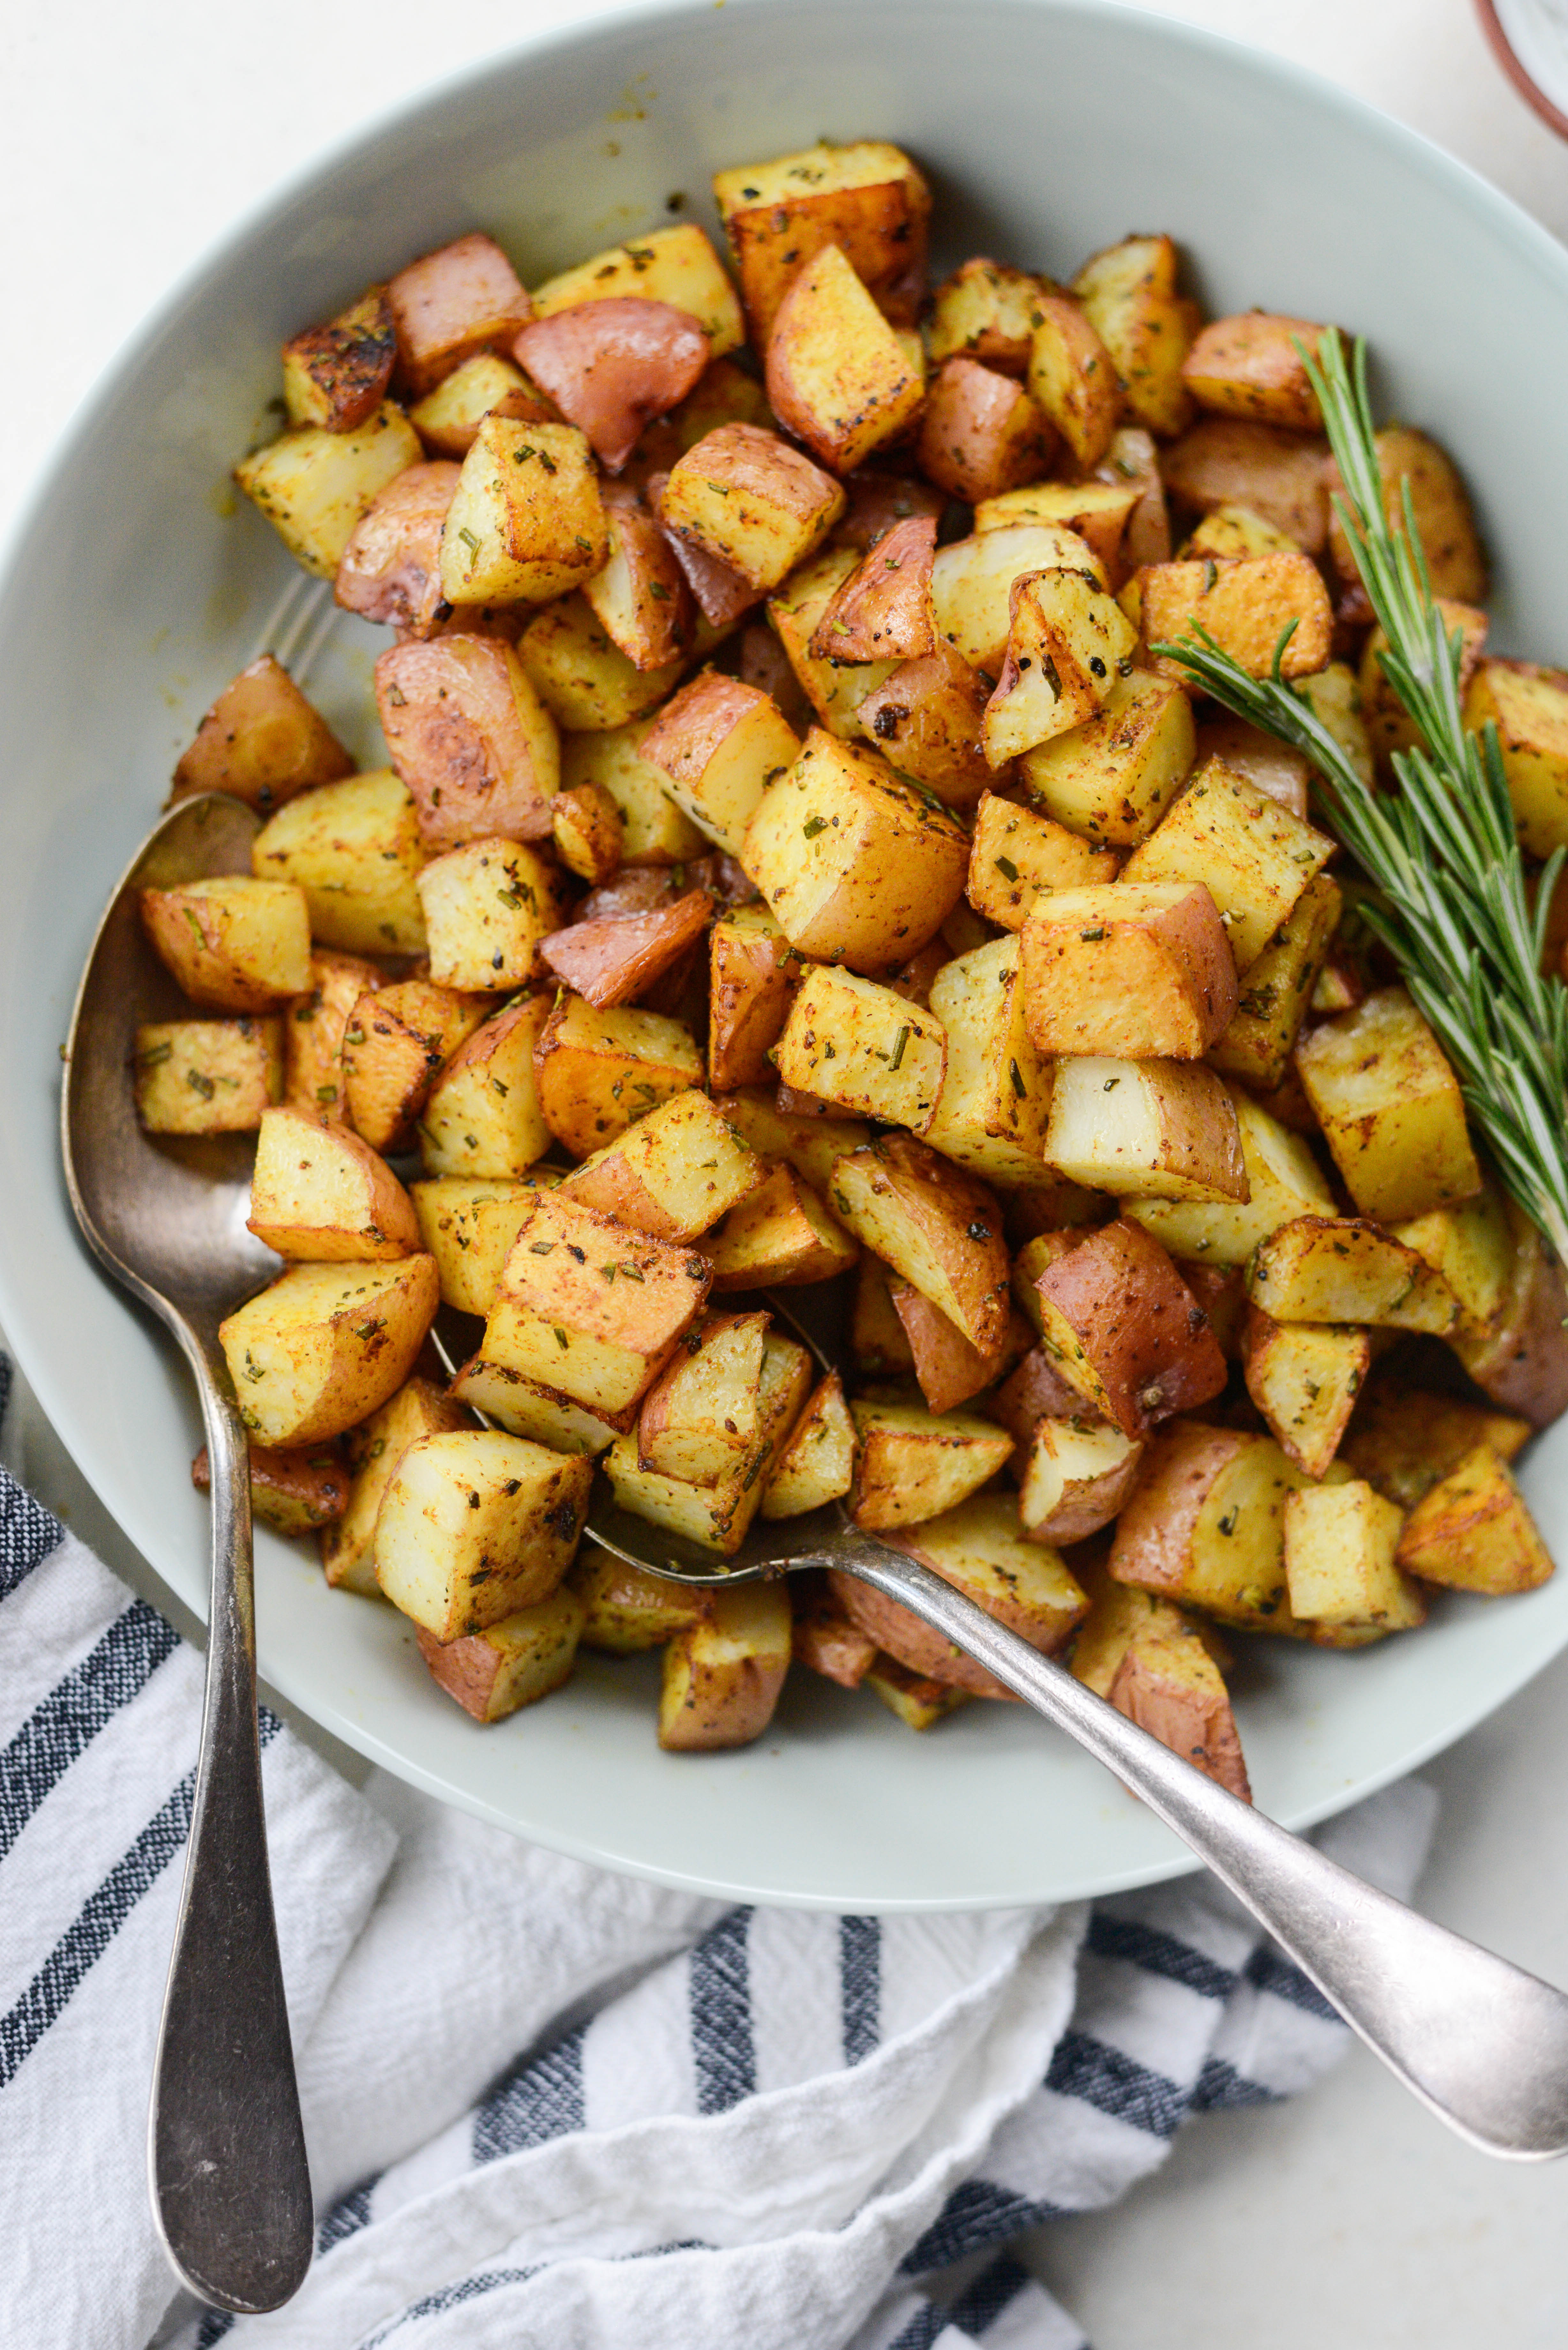 https://www.simplyscratch.com/wp-content/uploads/2019/04/Simple-Rosemary-Breakfast-Potatoes-l-SimplyScratch.com-rosemary-breakfast-potatoes-hash-sidedish-17.jpg